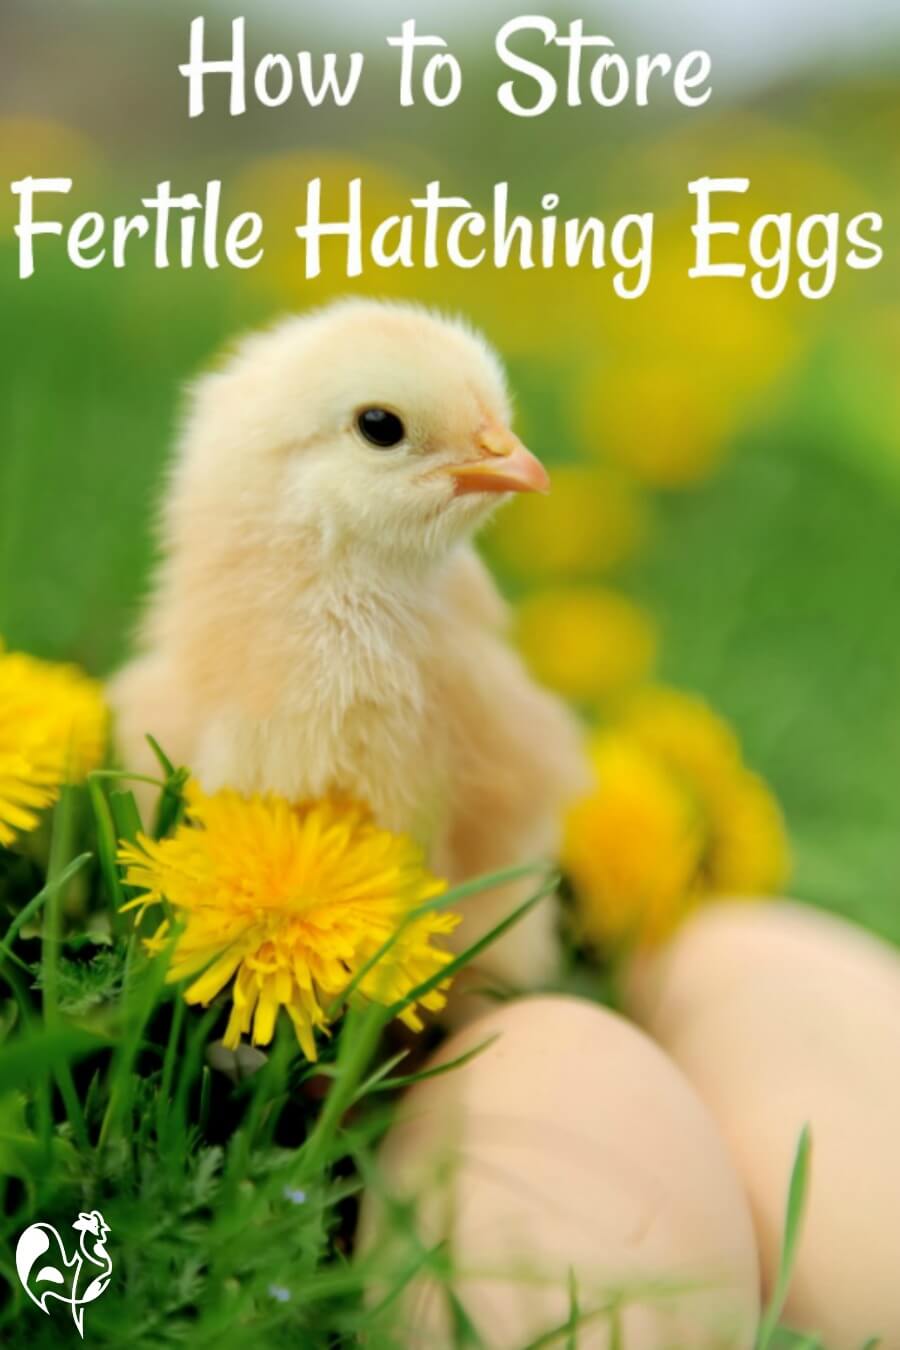 www.raising-happy-chickens.com